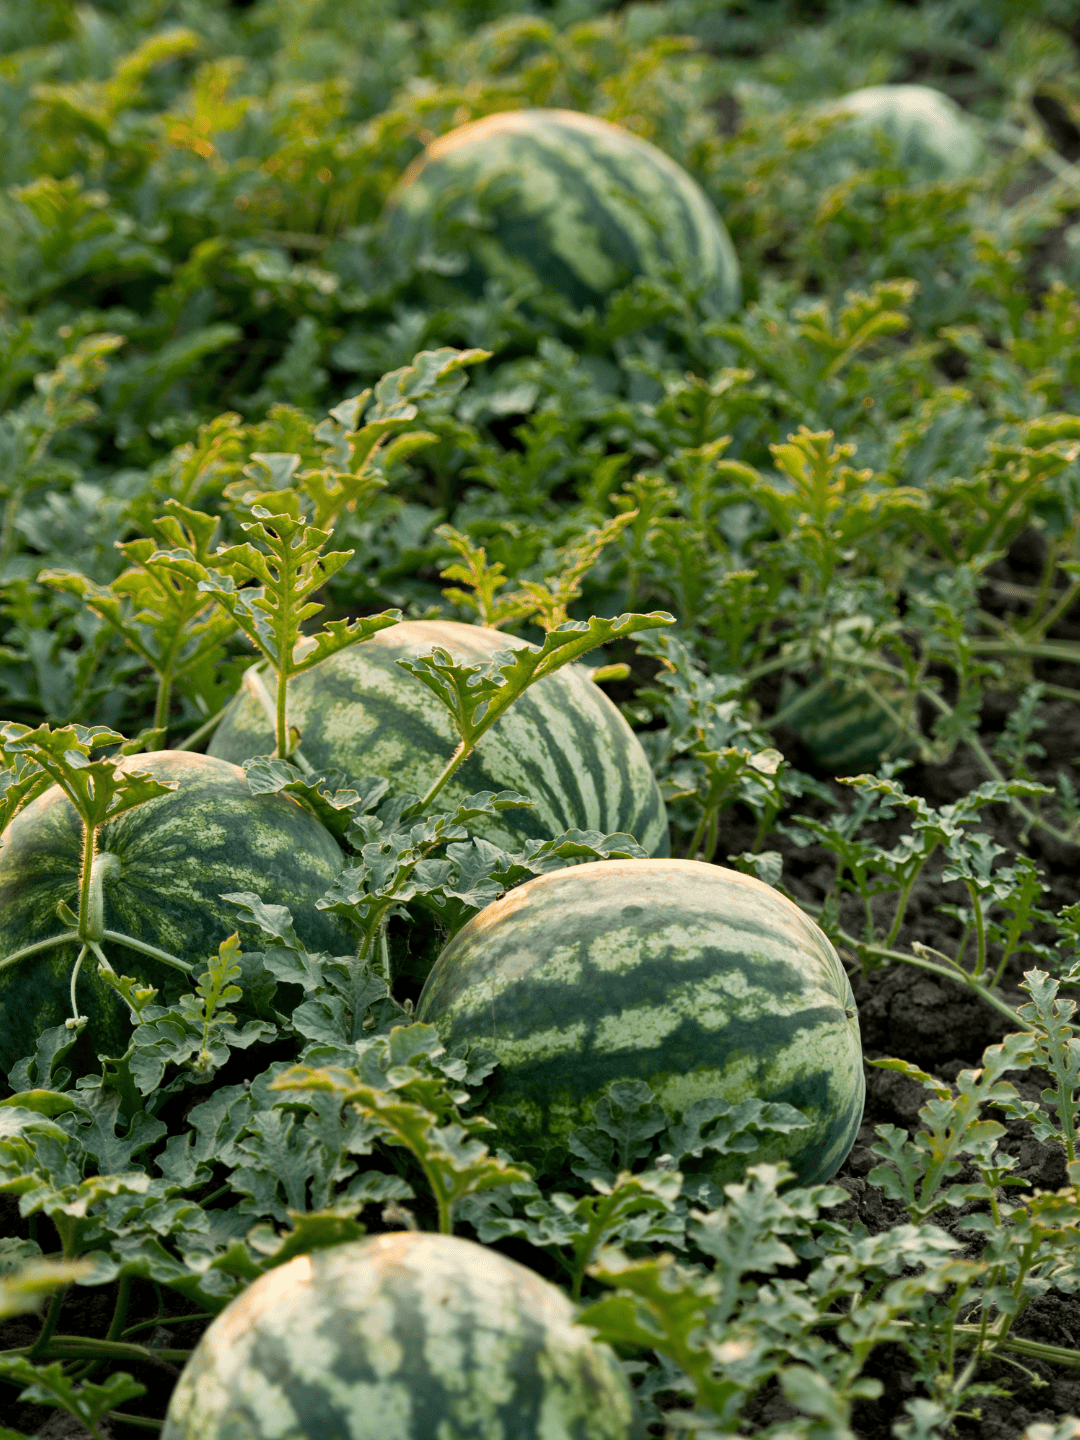 watermelons growing in a field